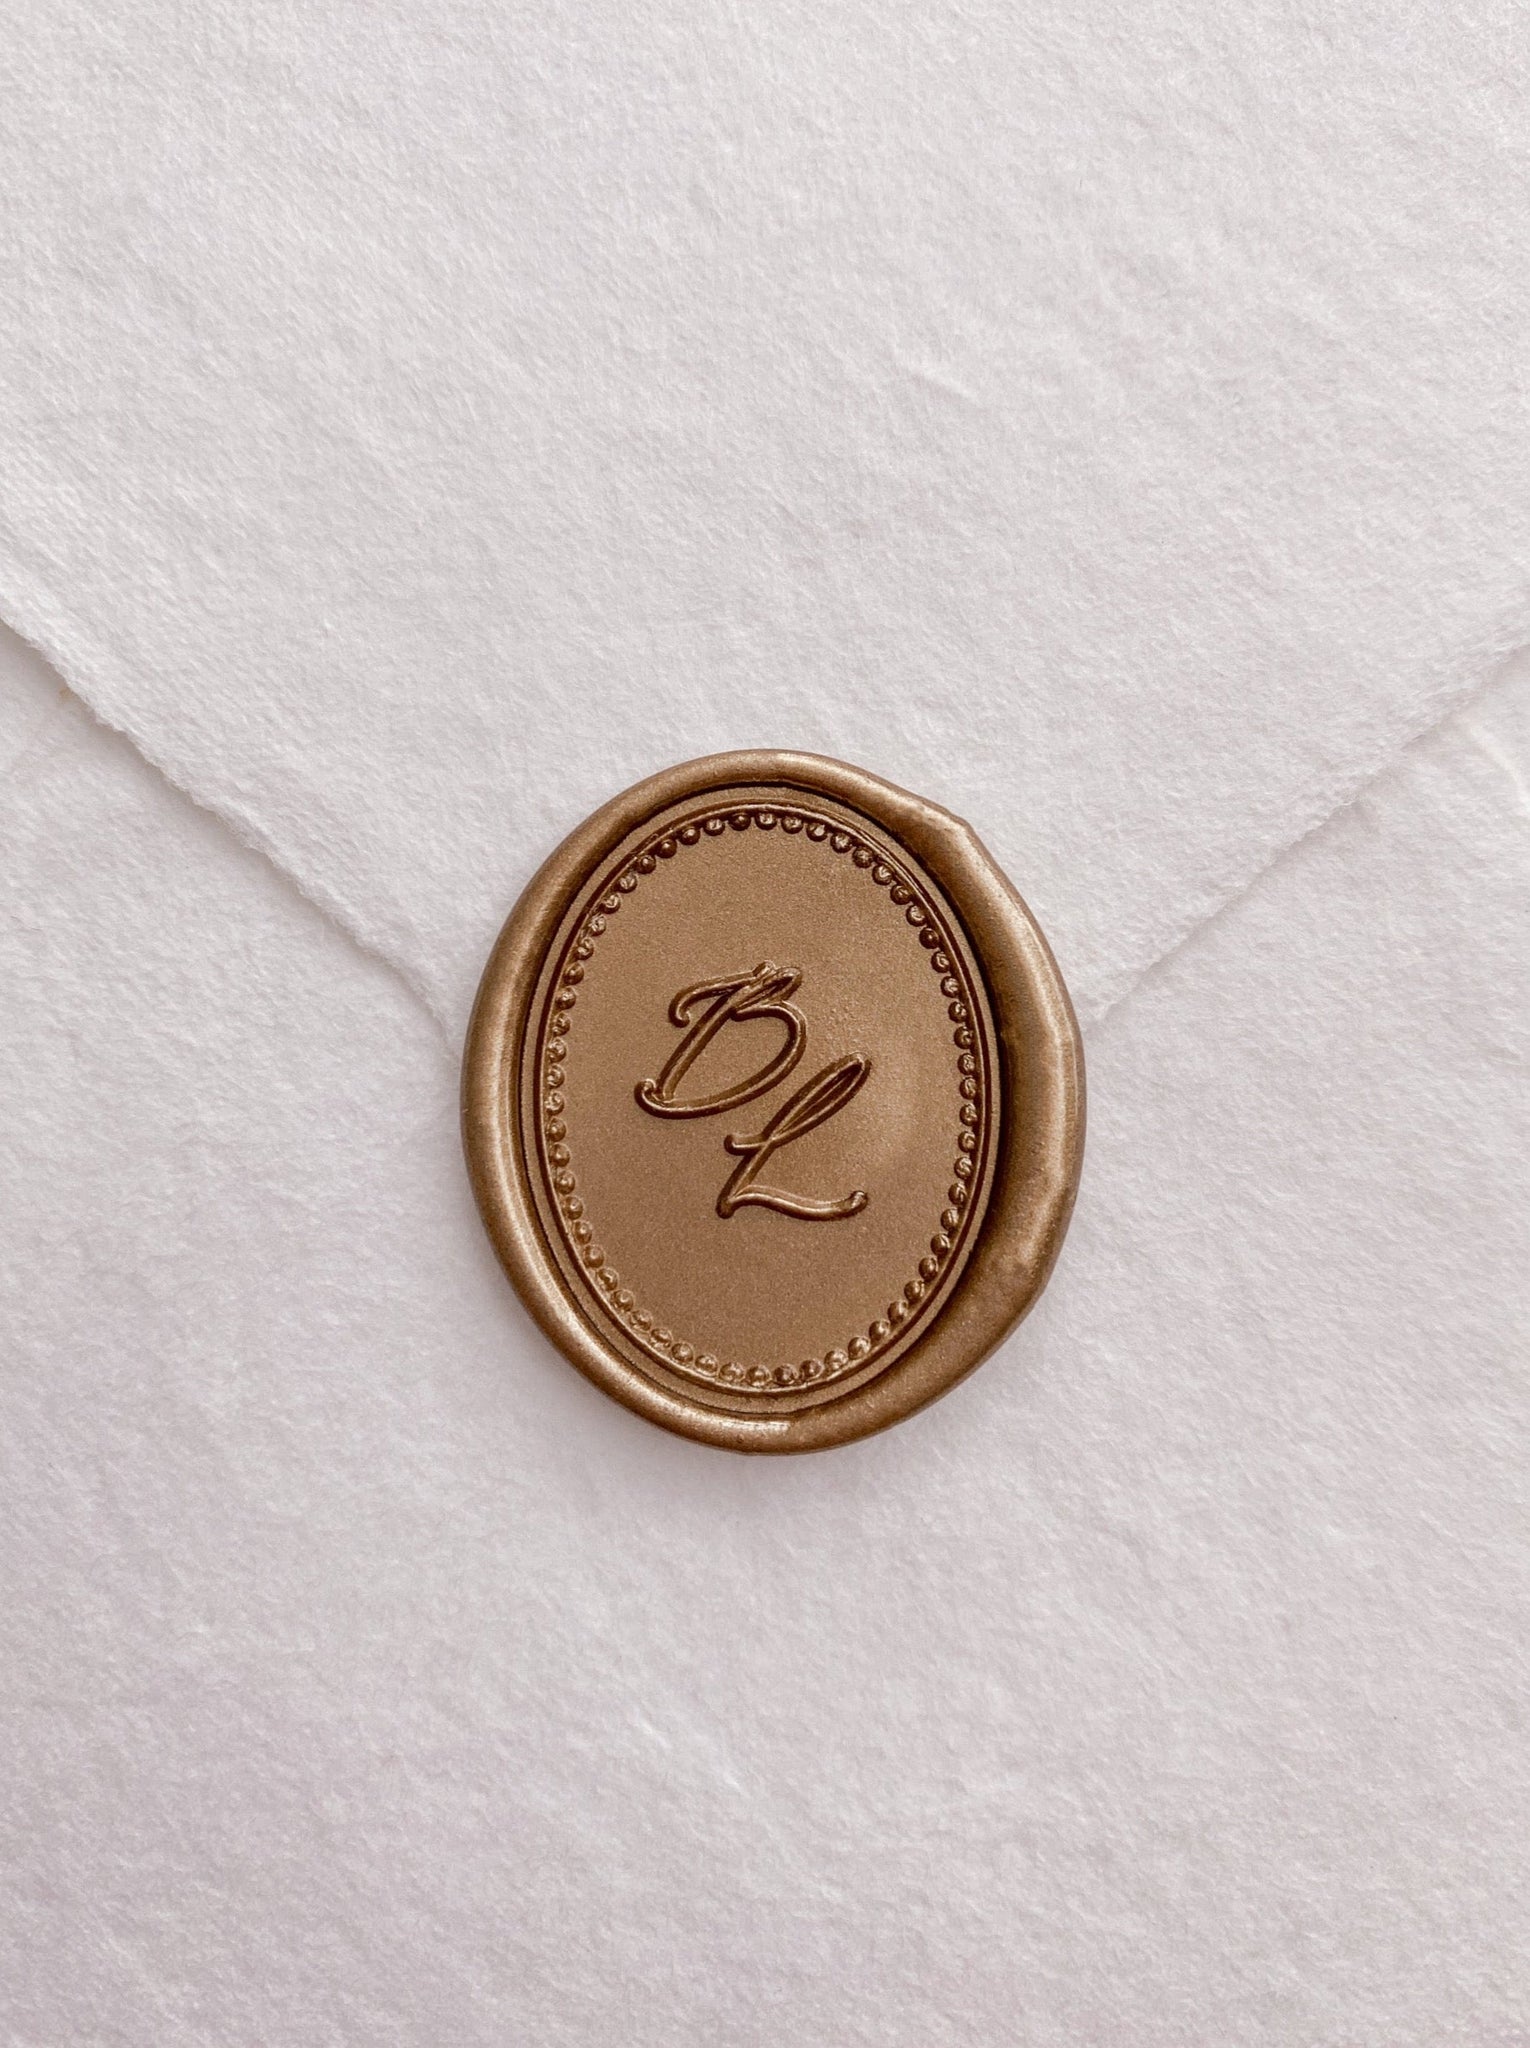 Monogram Wax Seal, Envelope Seal, Wedding Stamp, Initials Wax Seal